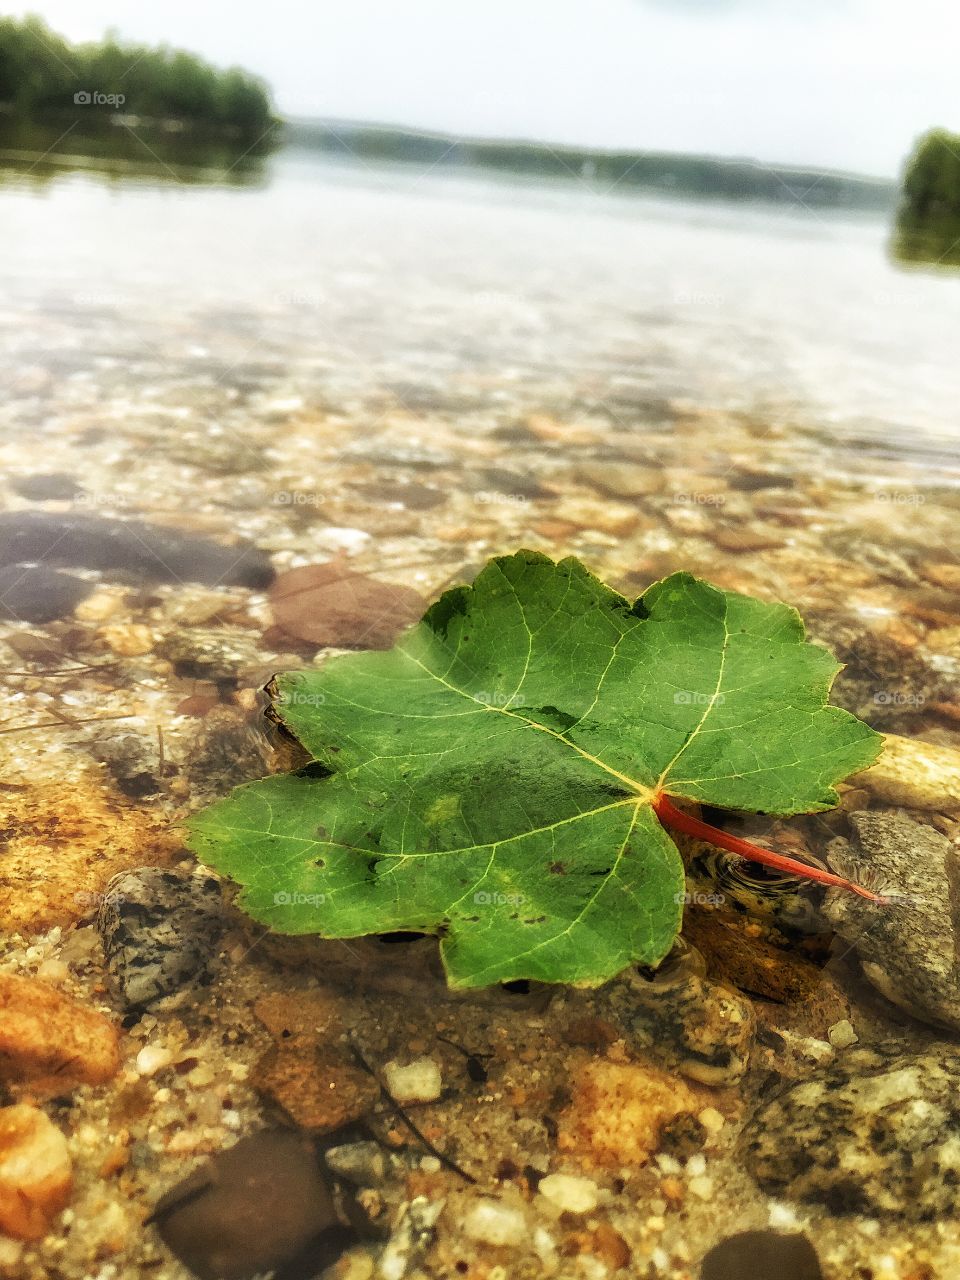 Lake leaf.. Floating leaf.